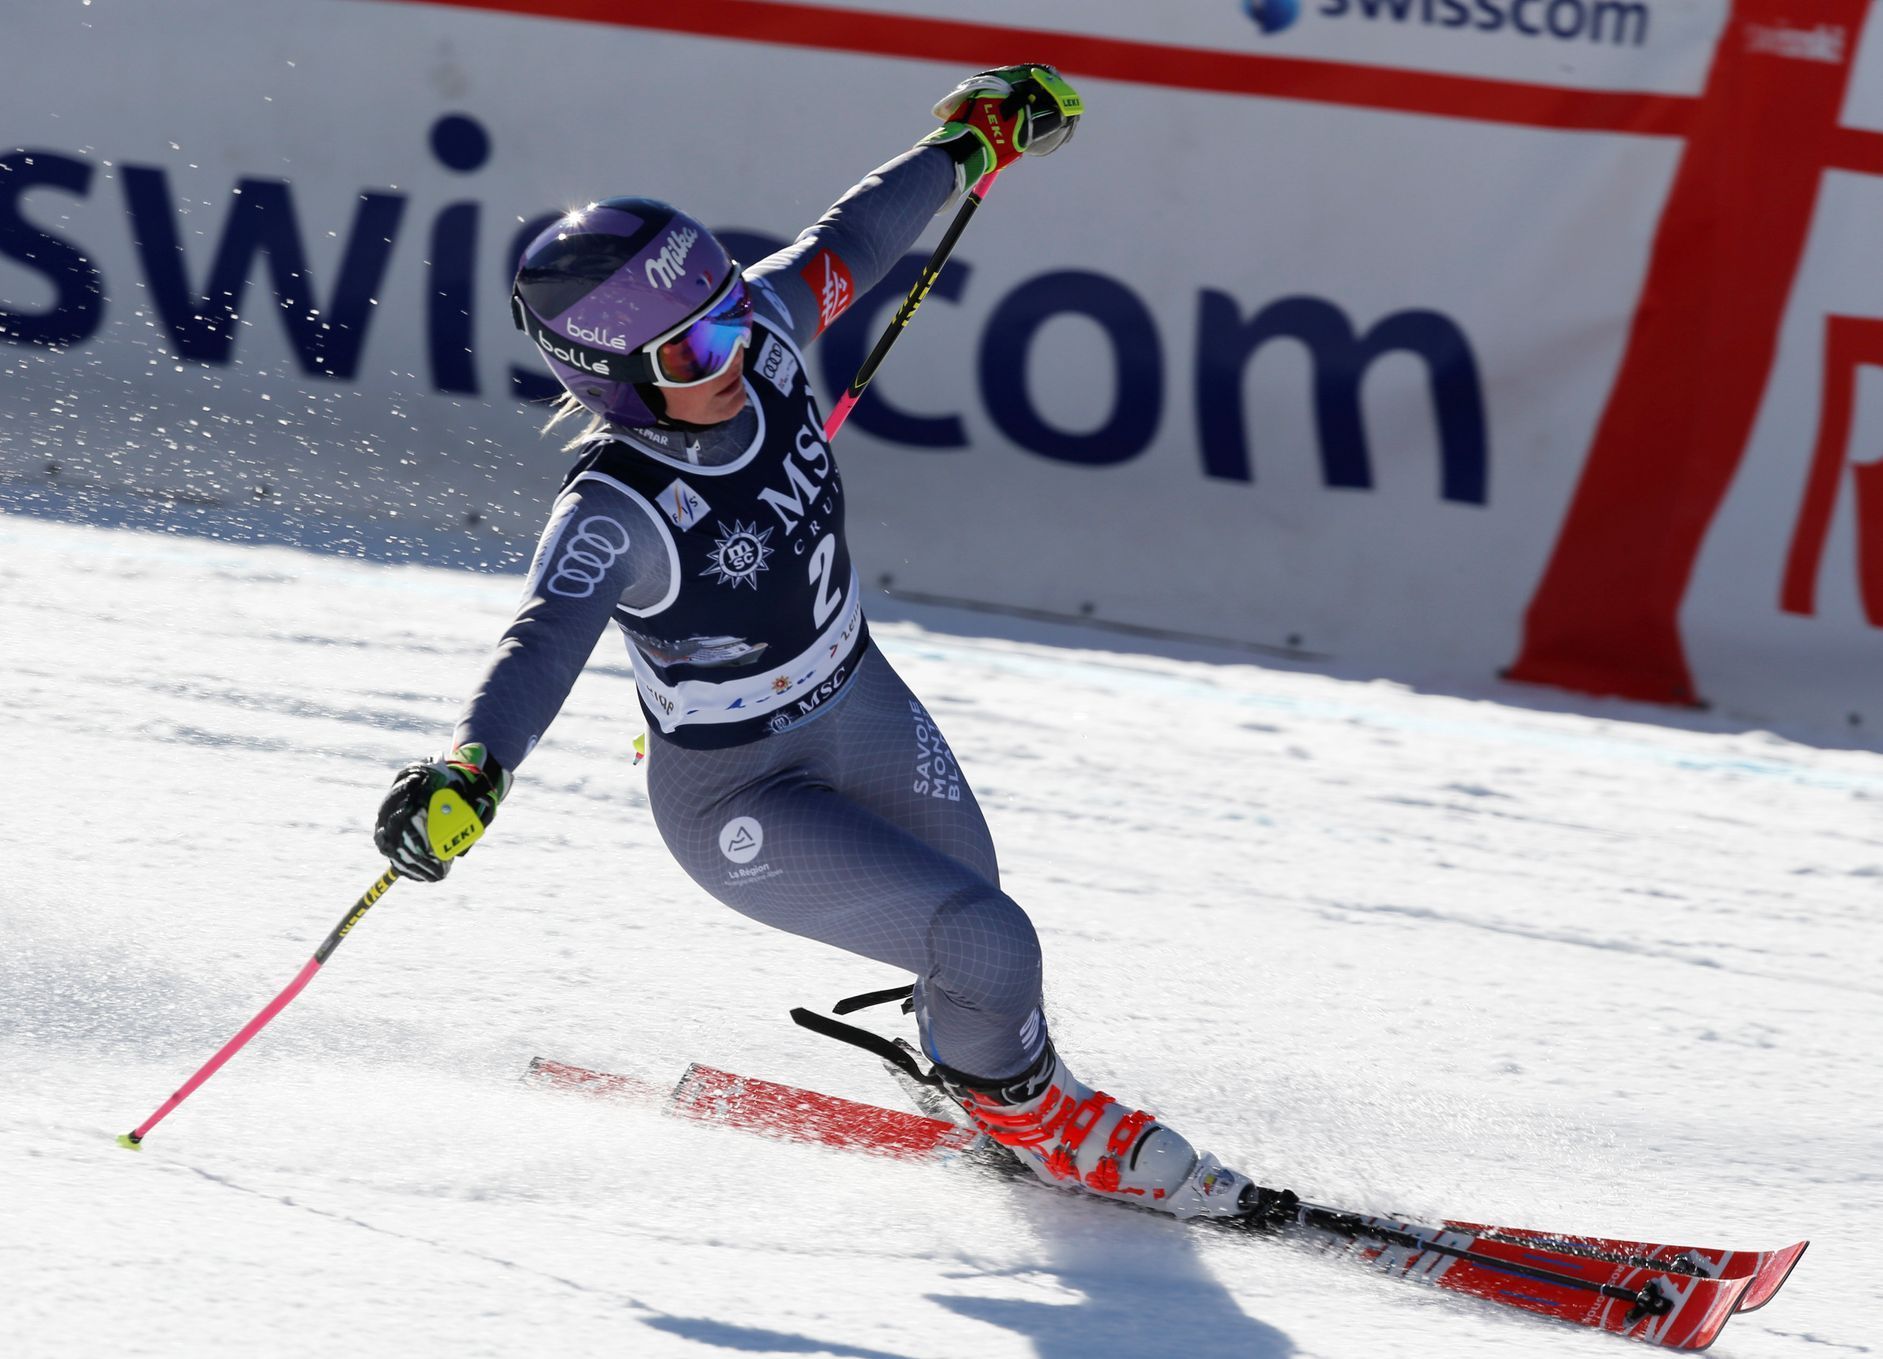 Tessa Worleyová, obří slalom v Lenzerheide